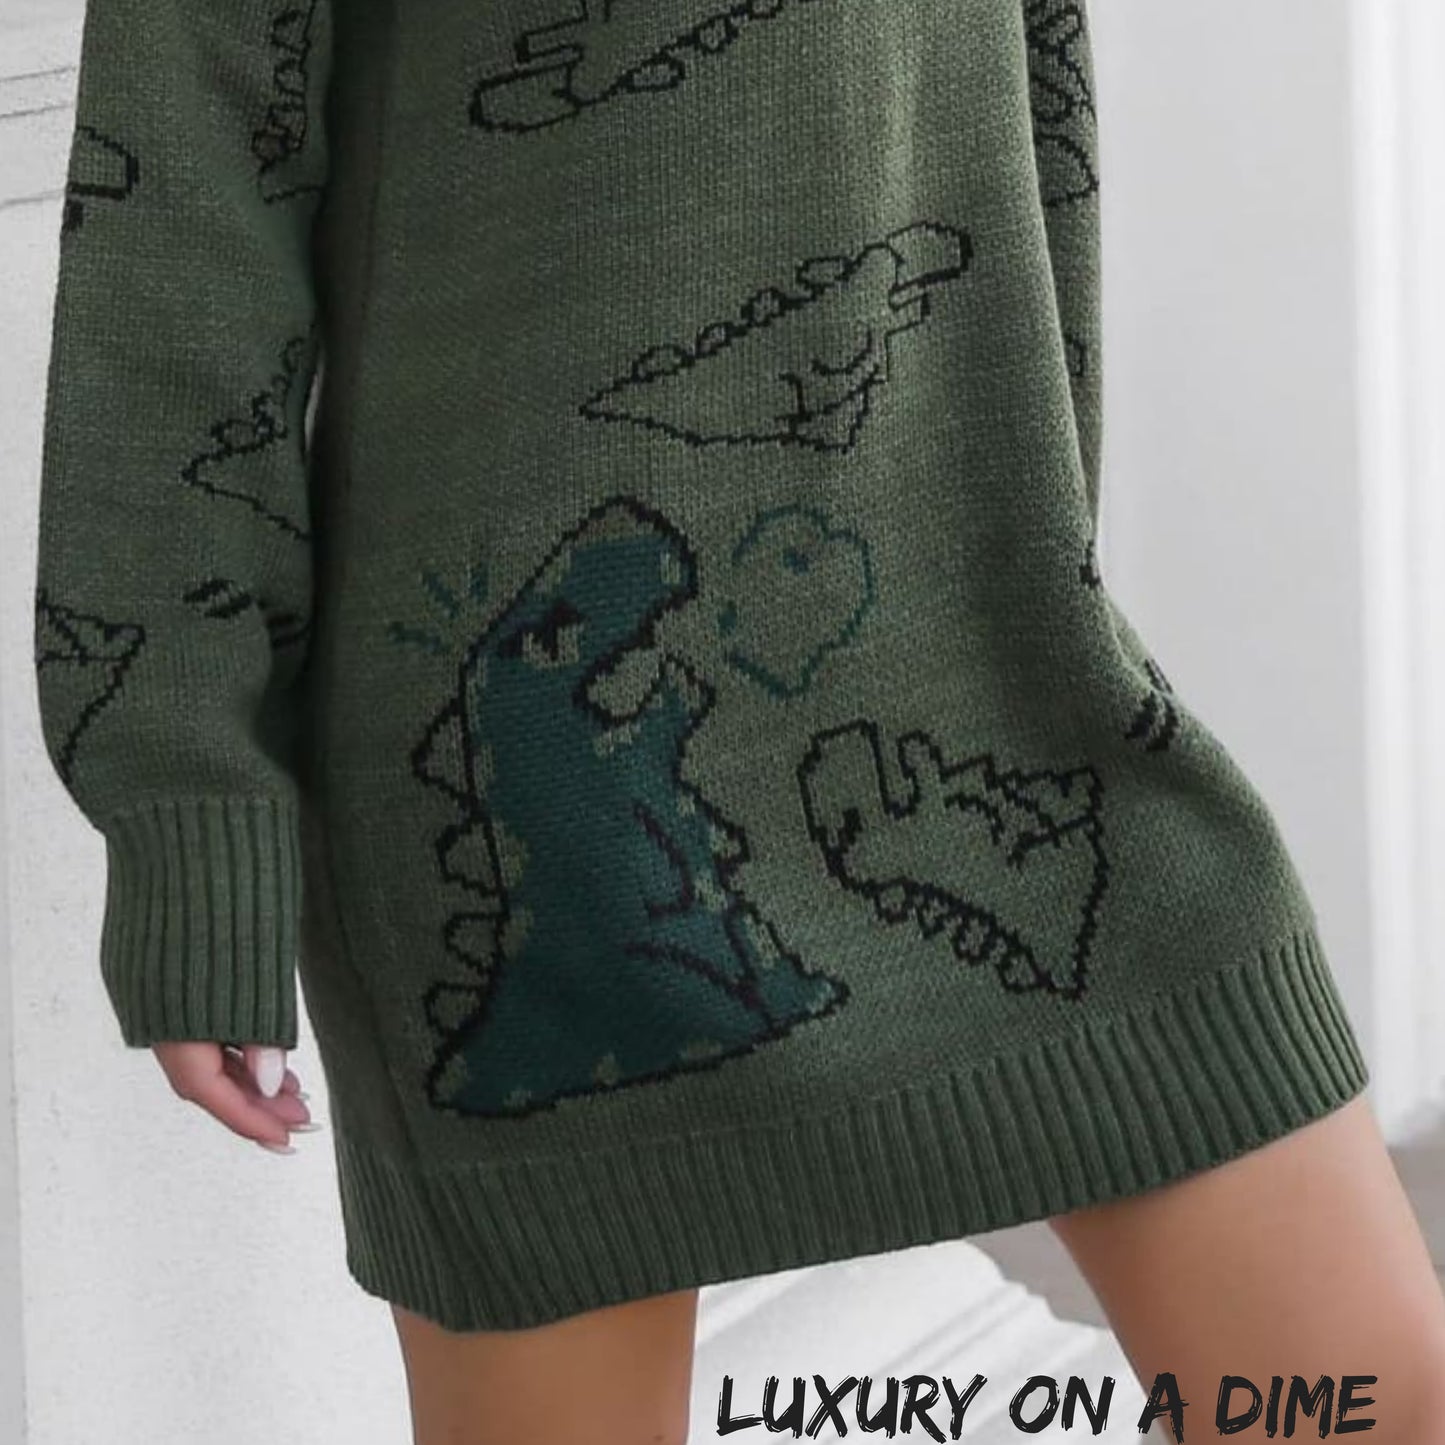 Dinosaur Knit Sweater Dress Round Neck Playful Long Sleeve Oversized Mini Pullover Fun Print